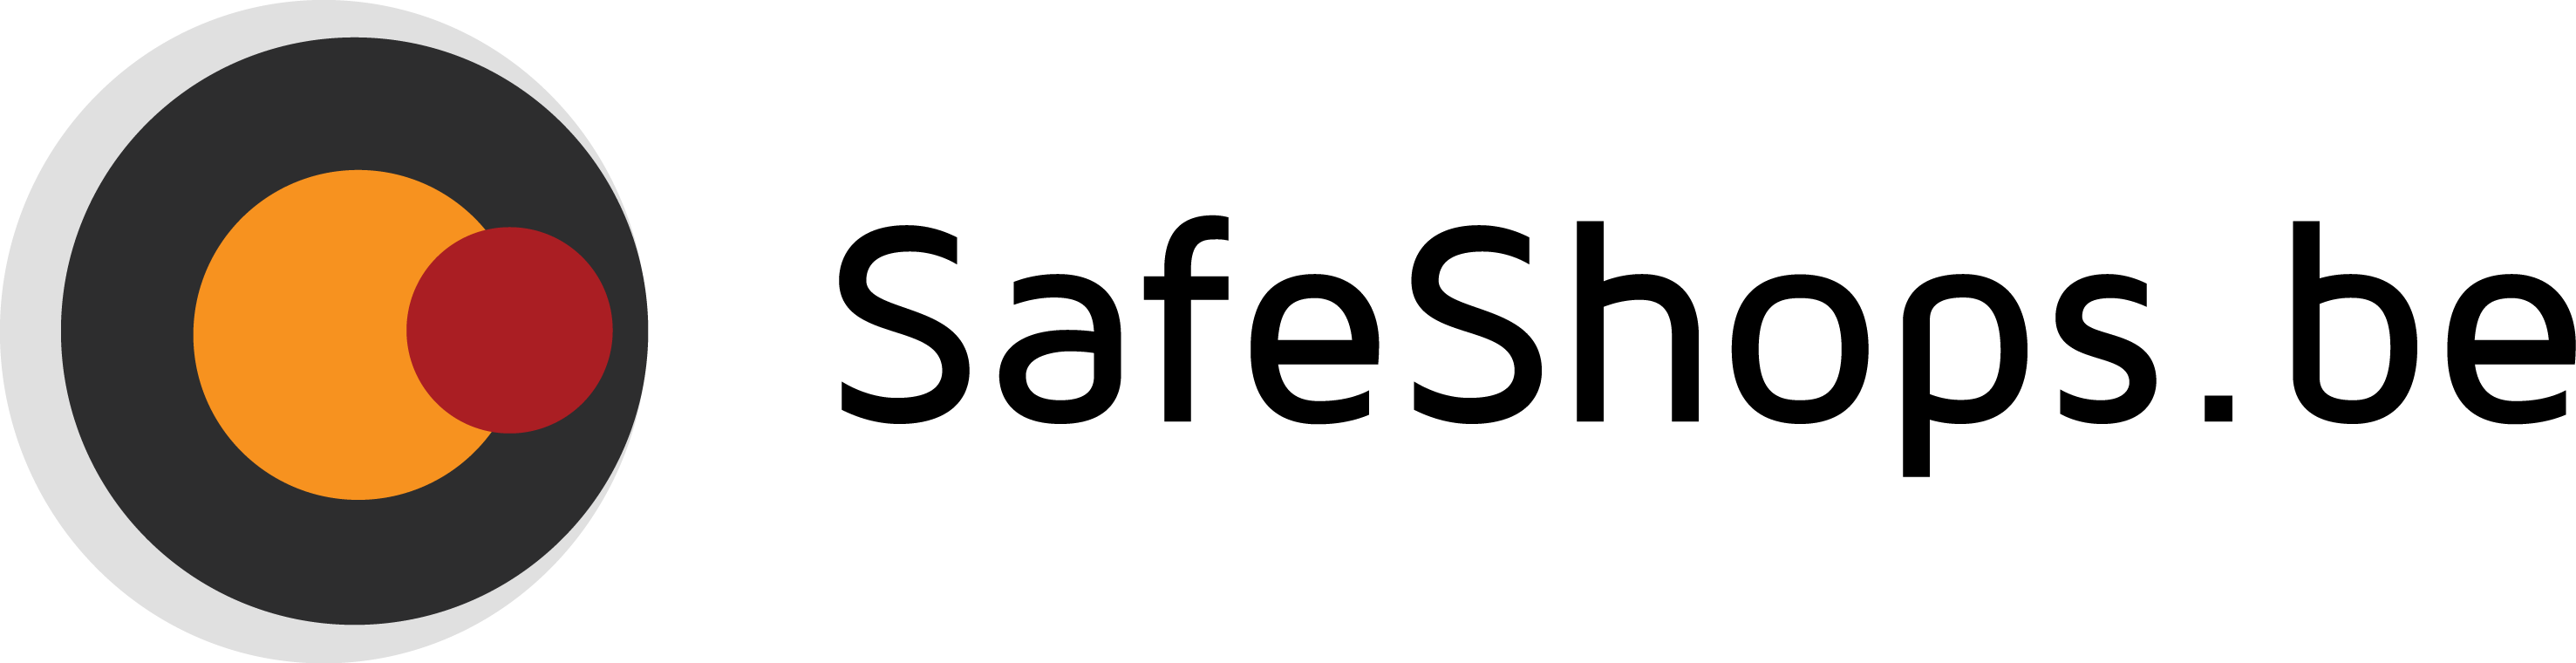 SafeShops.be